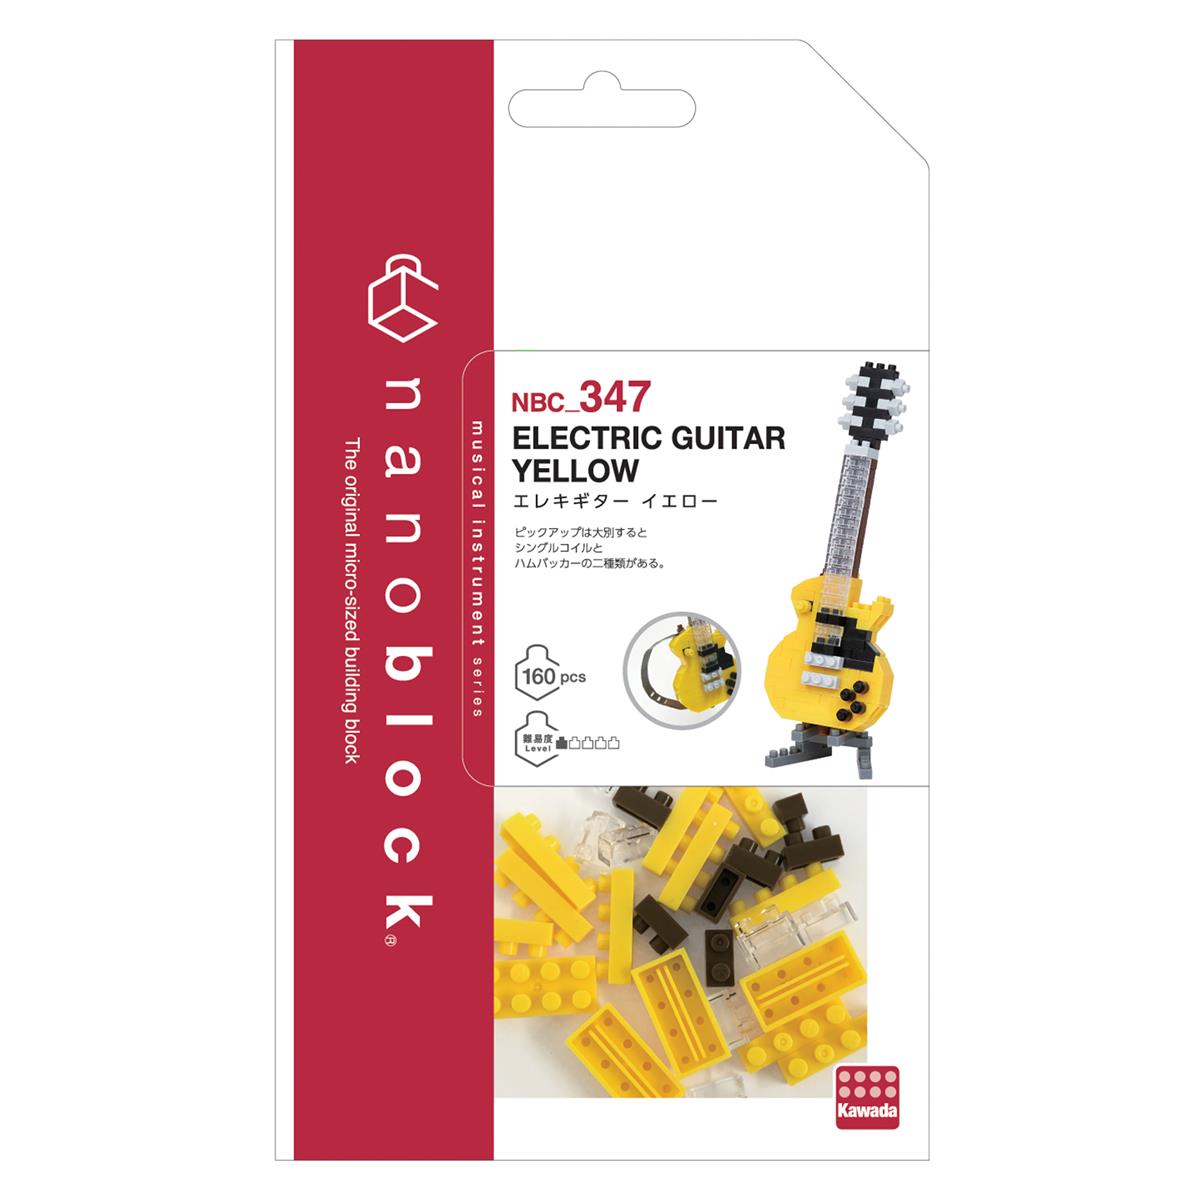 NBC-347 - yellow electric guitar